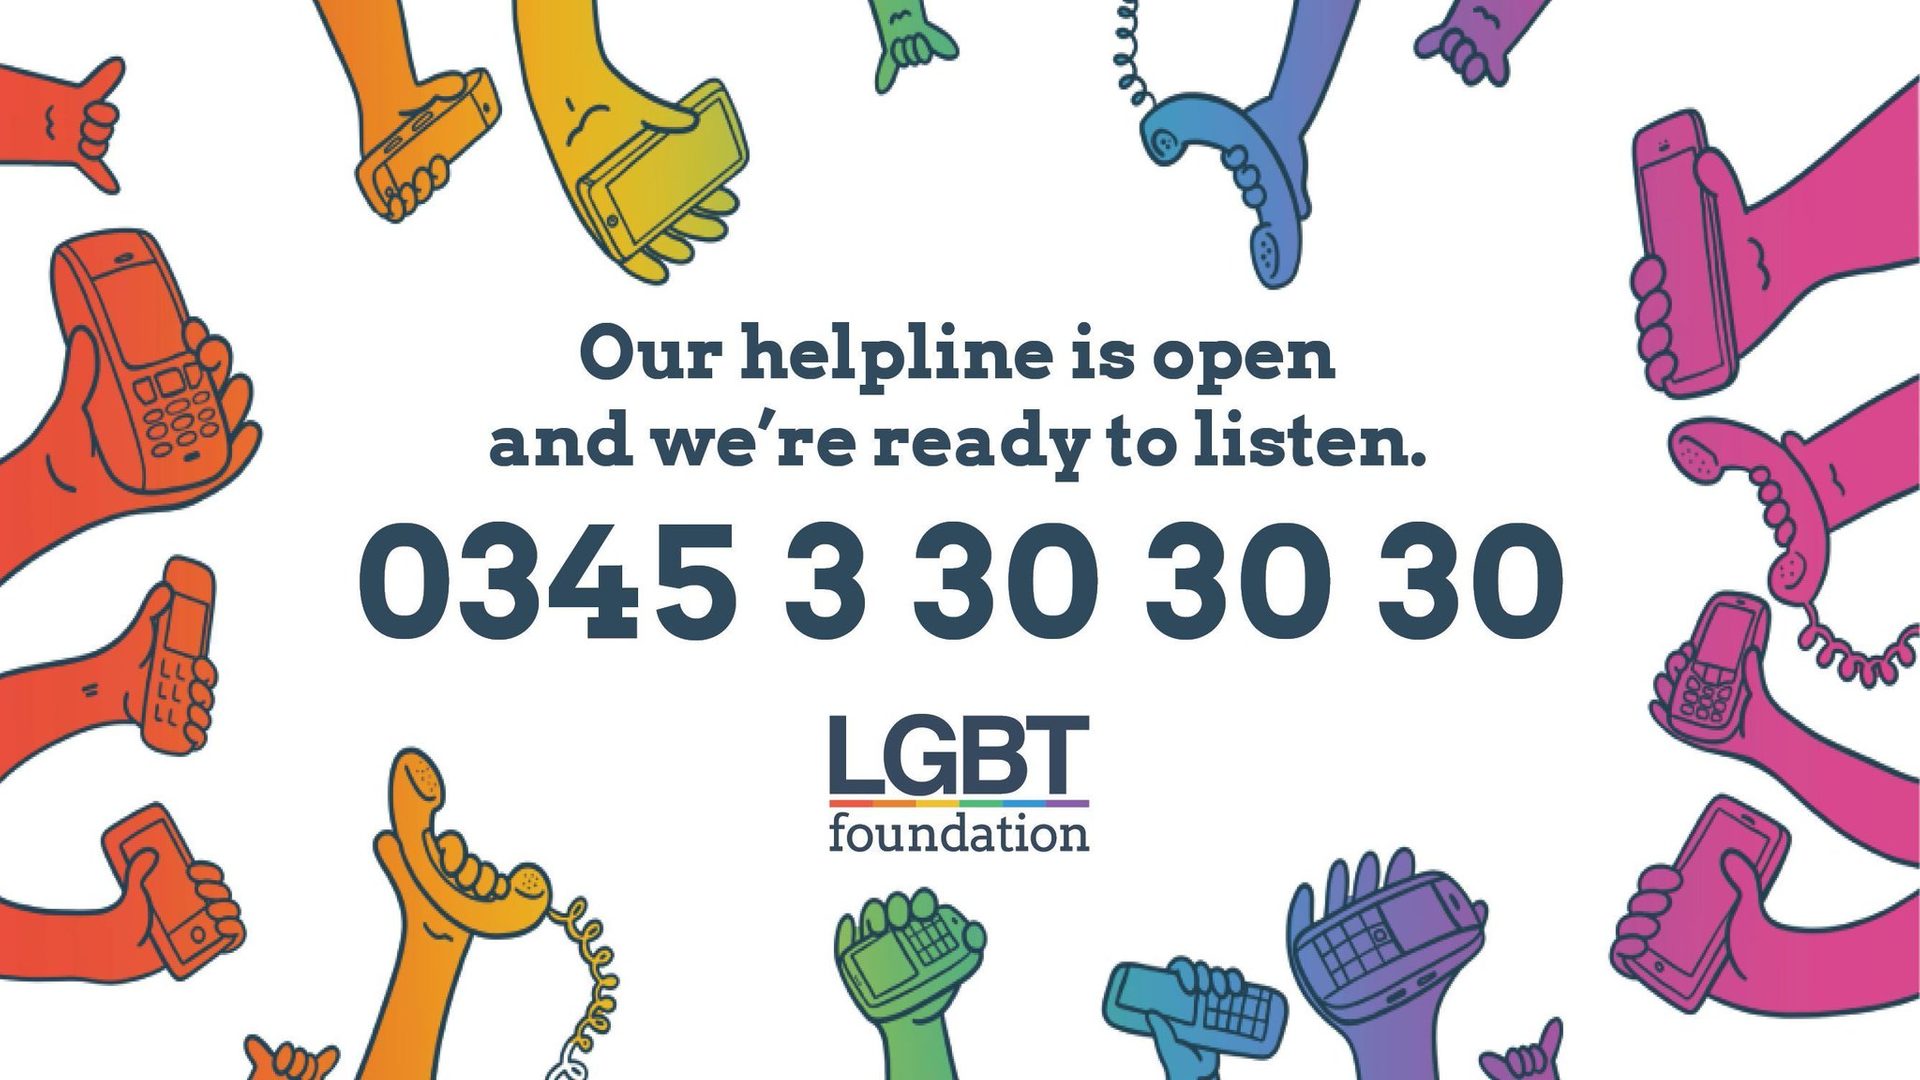 Lgbt Foundation Lgbtq Support In Manchester Gay Village Flokkr 